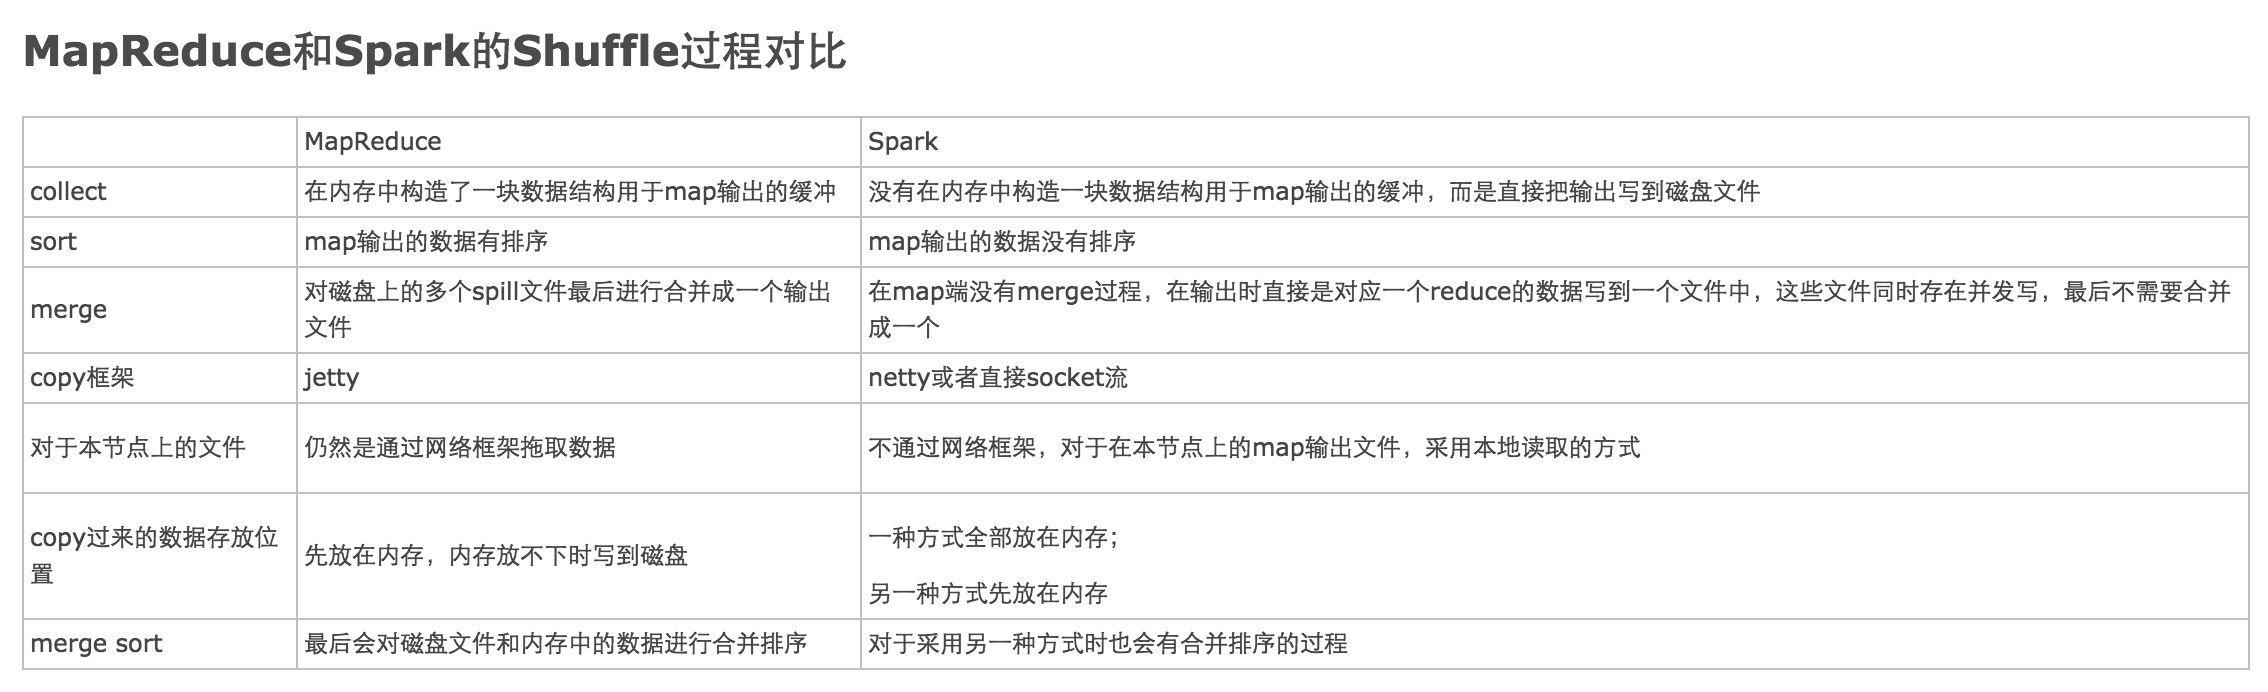 Spark Shuffle和Hadoop Shuffle有哪些区别